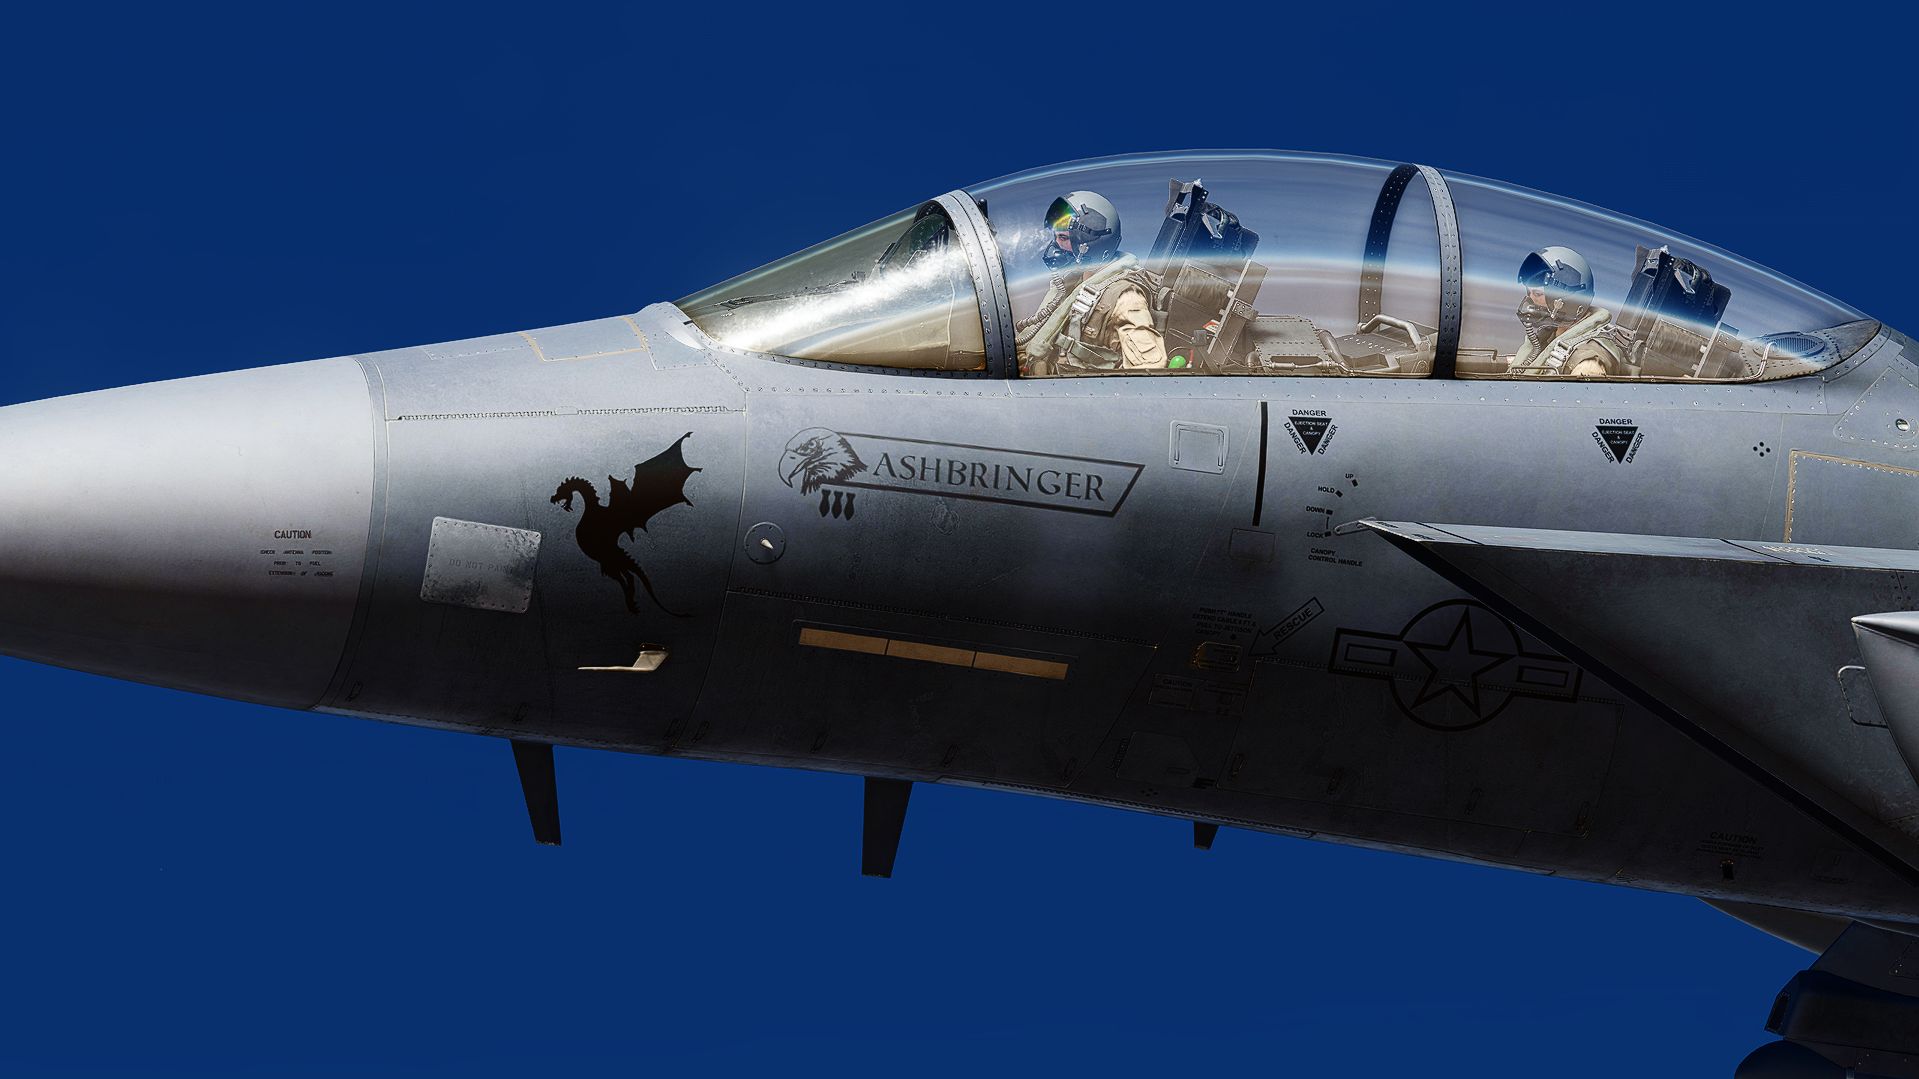 USAF 88-1705 "ASHBRINGER" - 389th "Thunderbolts"  - REWORKED